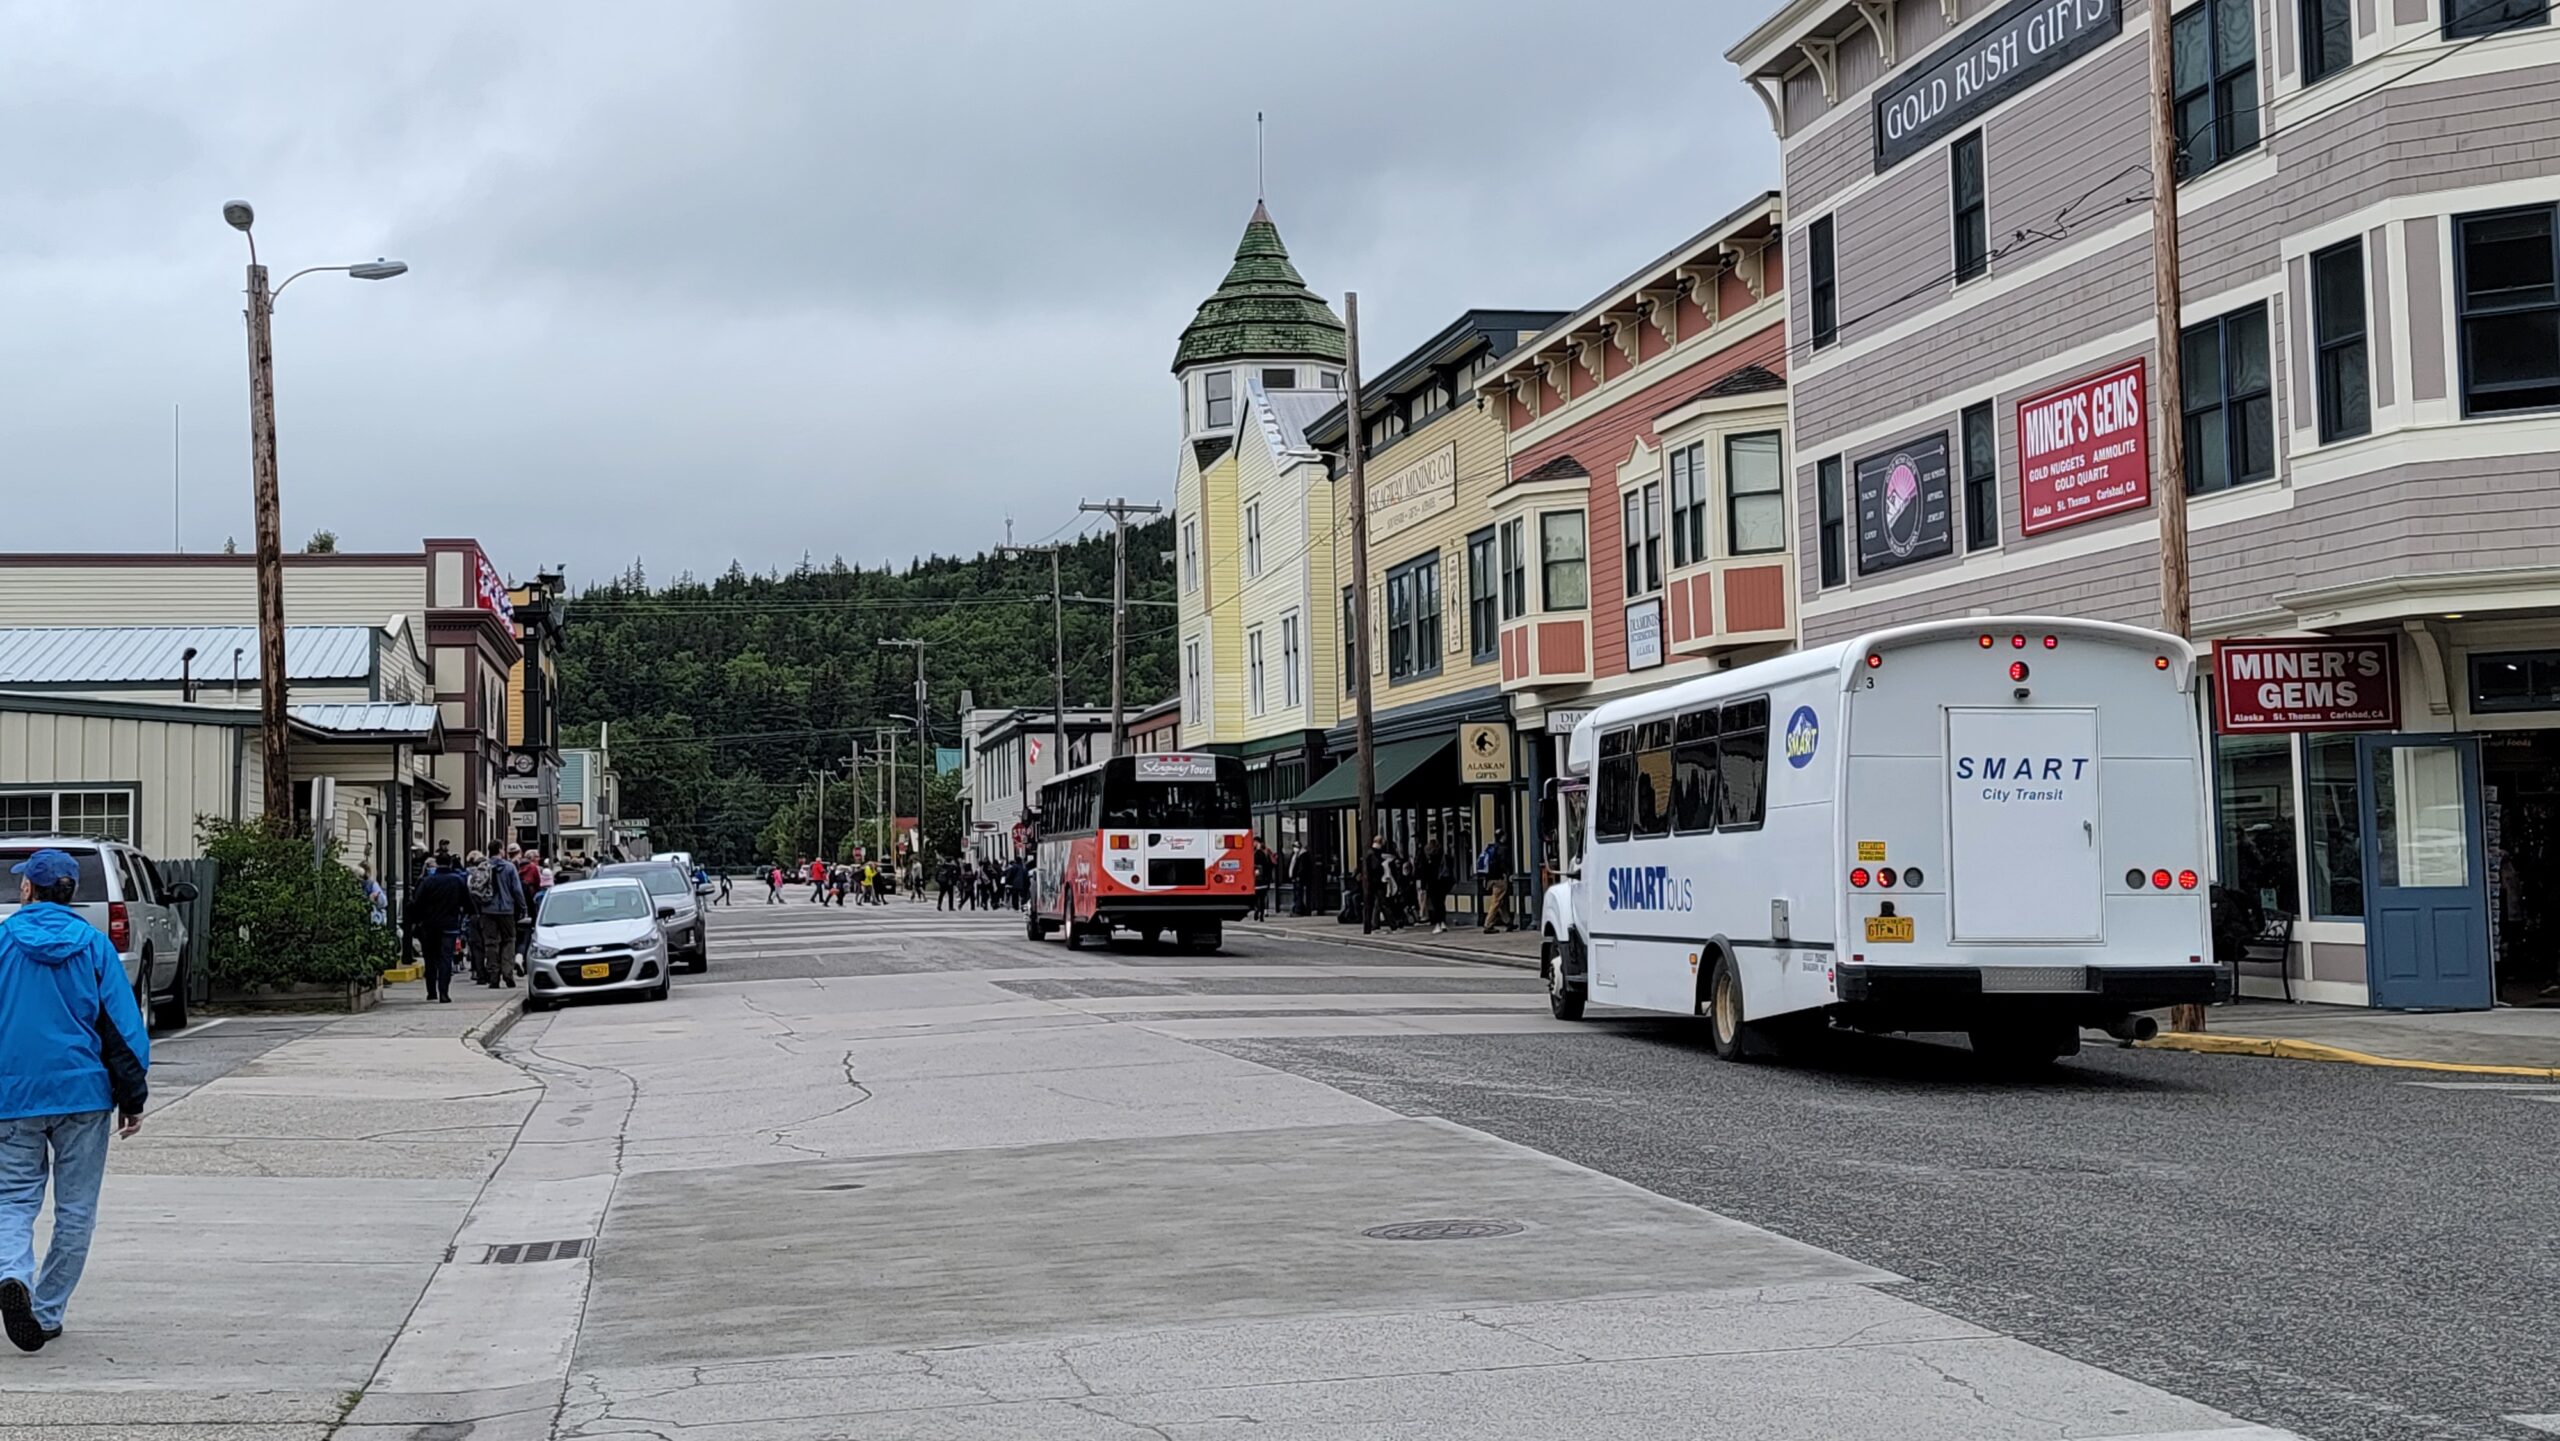 The main street in Skagway, Alaska